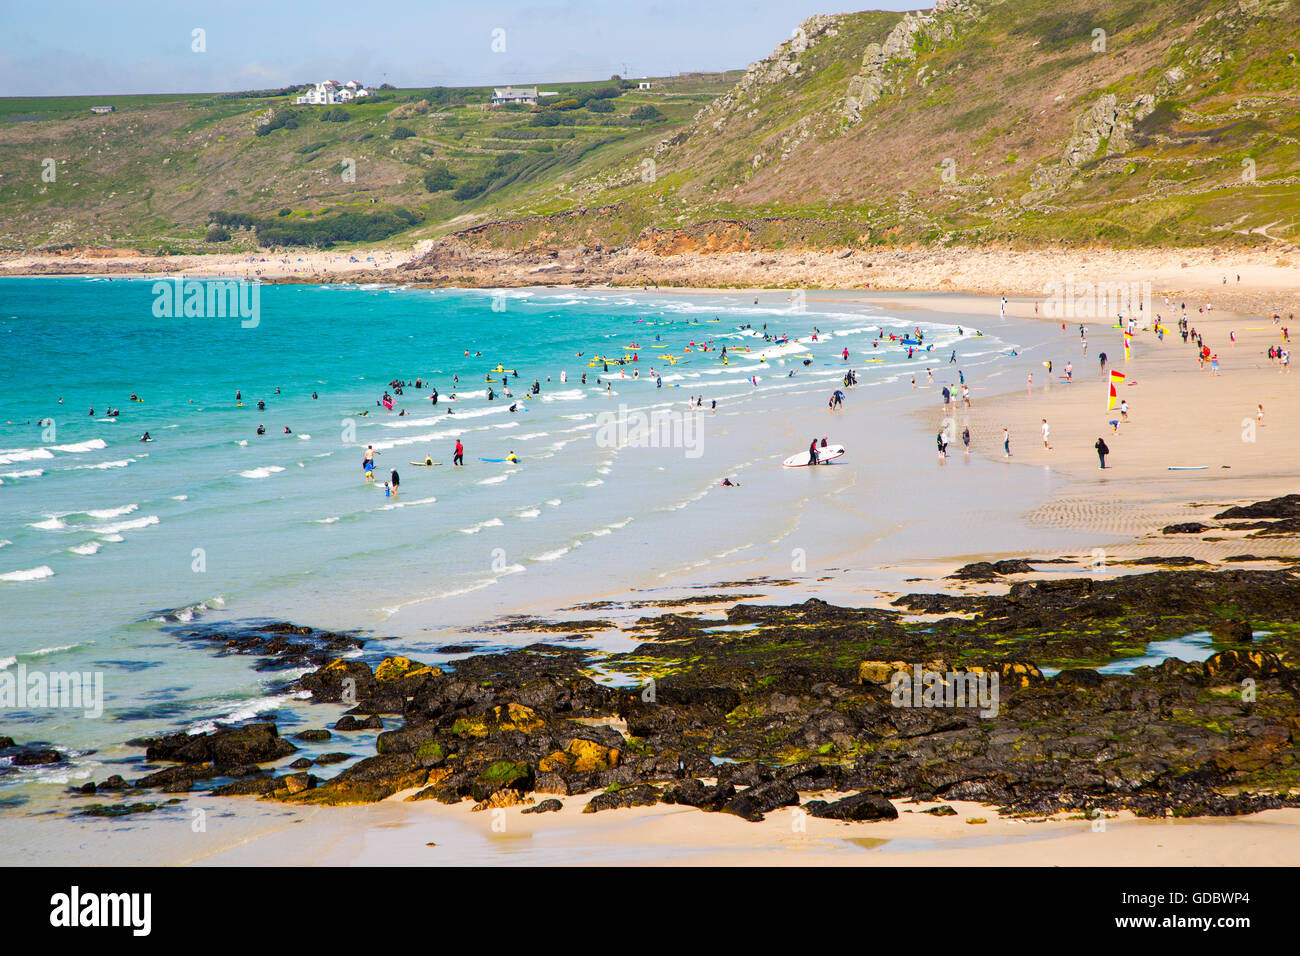 Coastal scenery with busy crowded sandy beach, Sennan Cove, Land's End,  Cornwall, England, UK Stock Photo